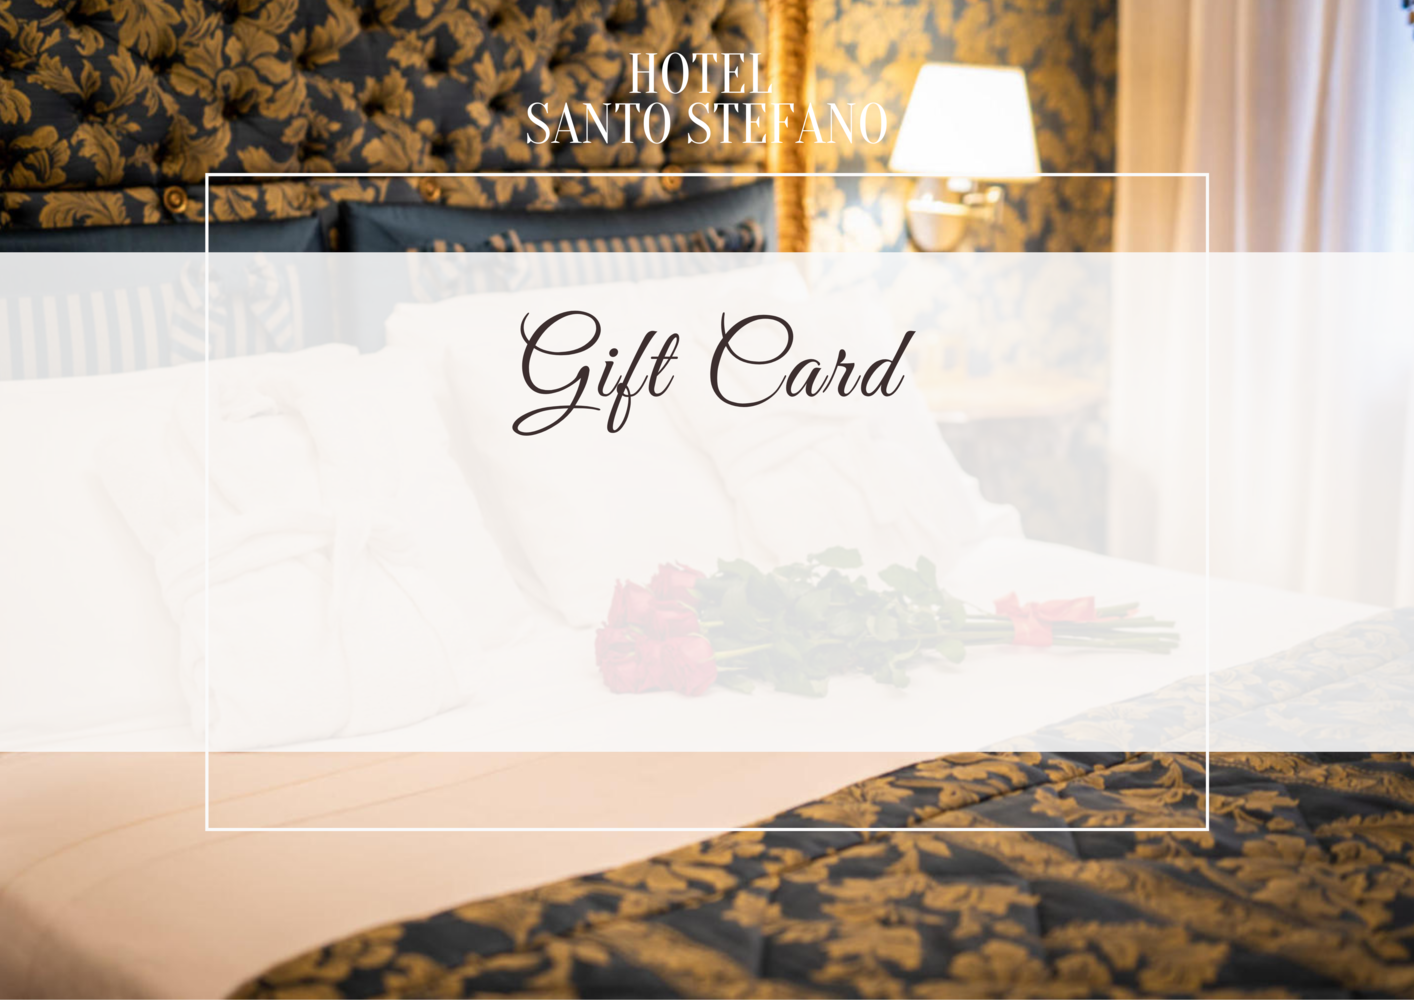 Gift Card - Hotel Santo Stefano Venezia